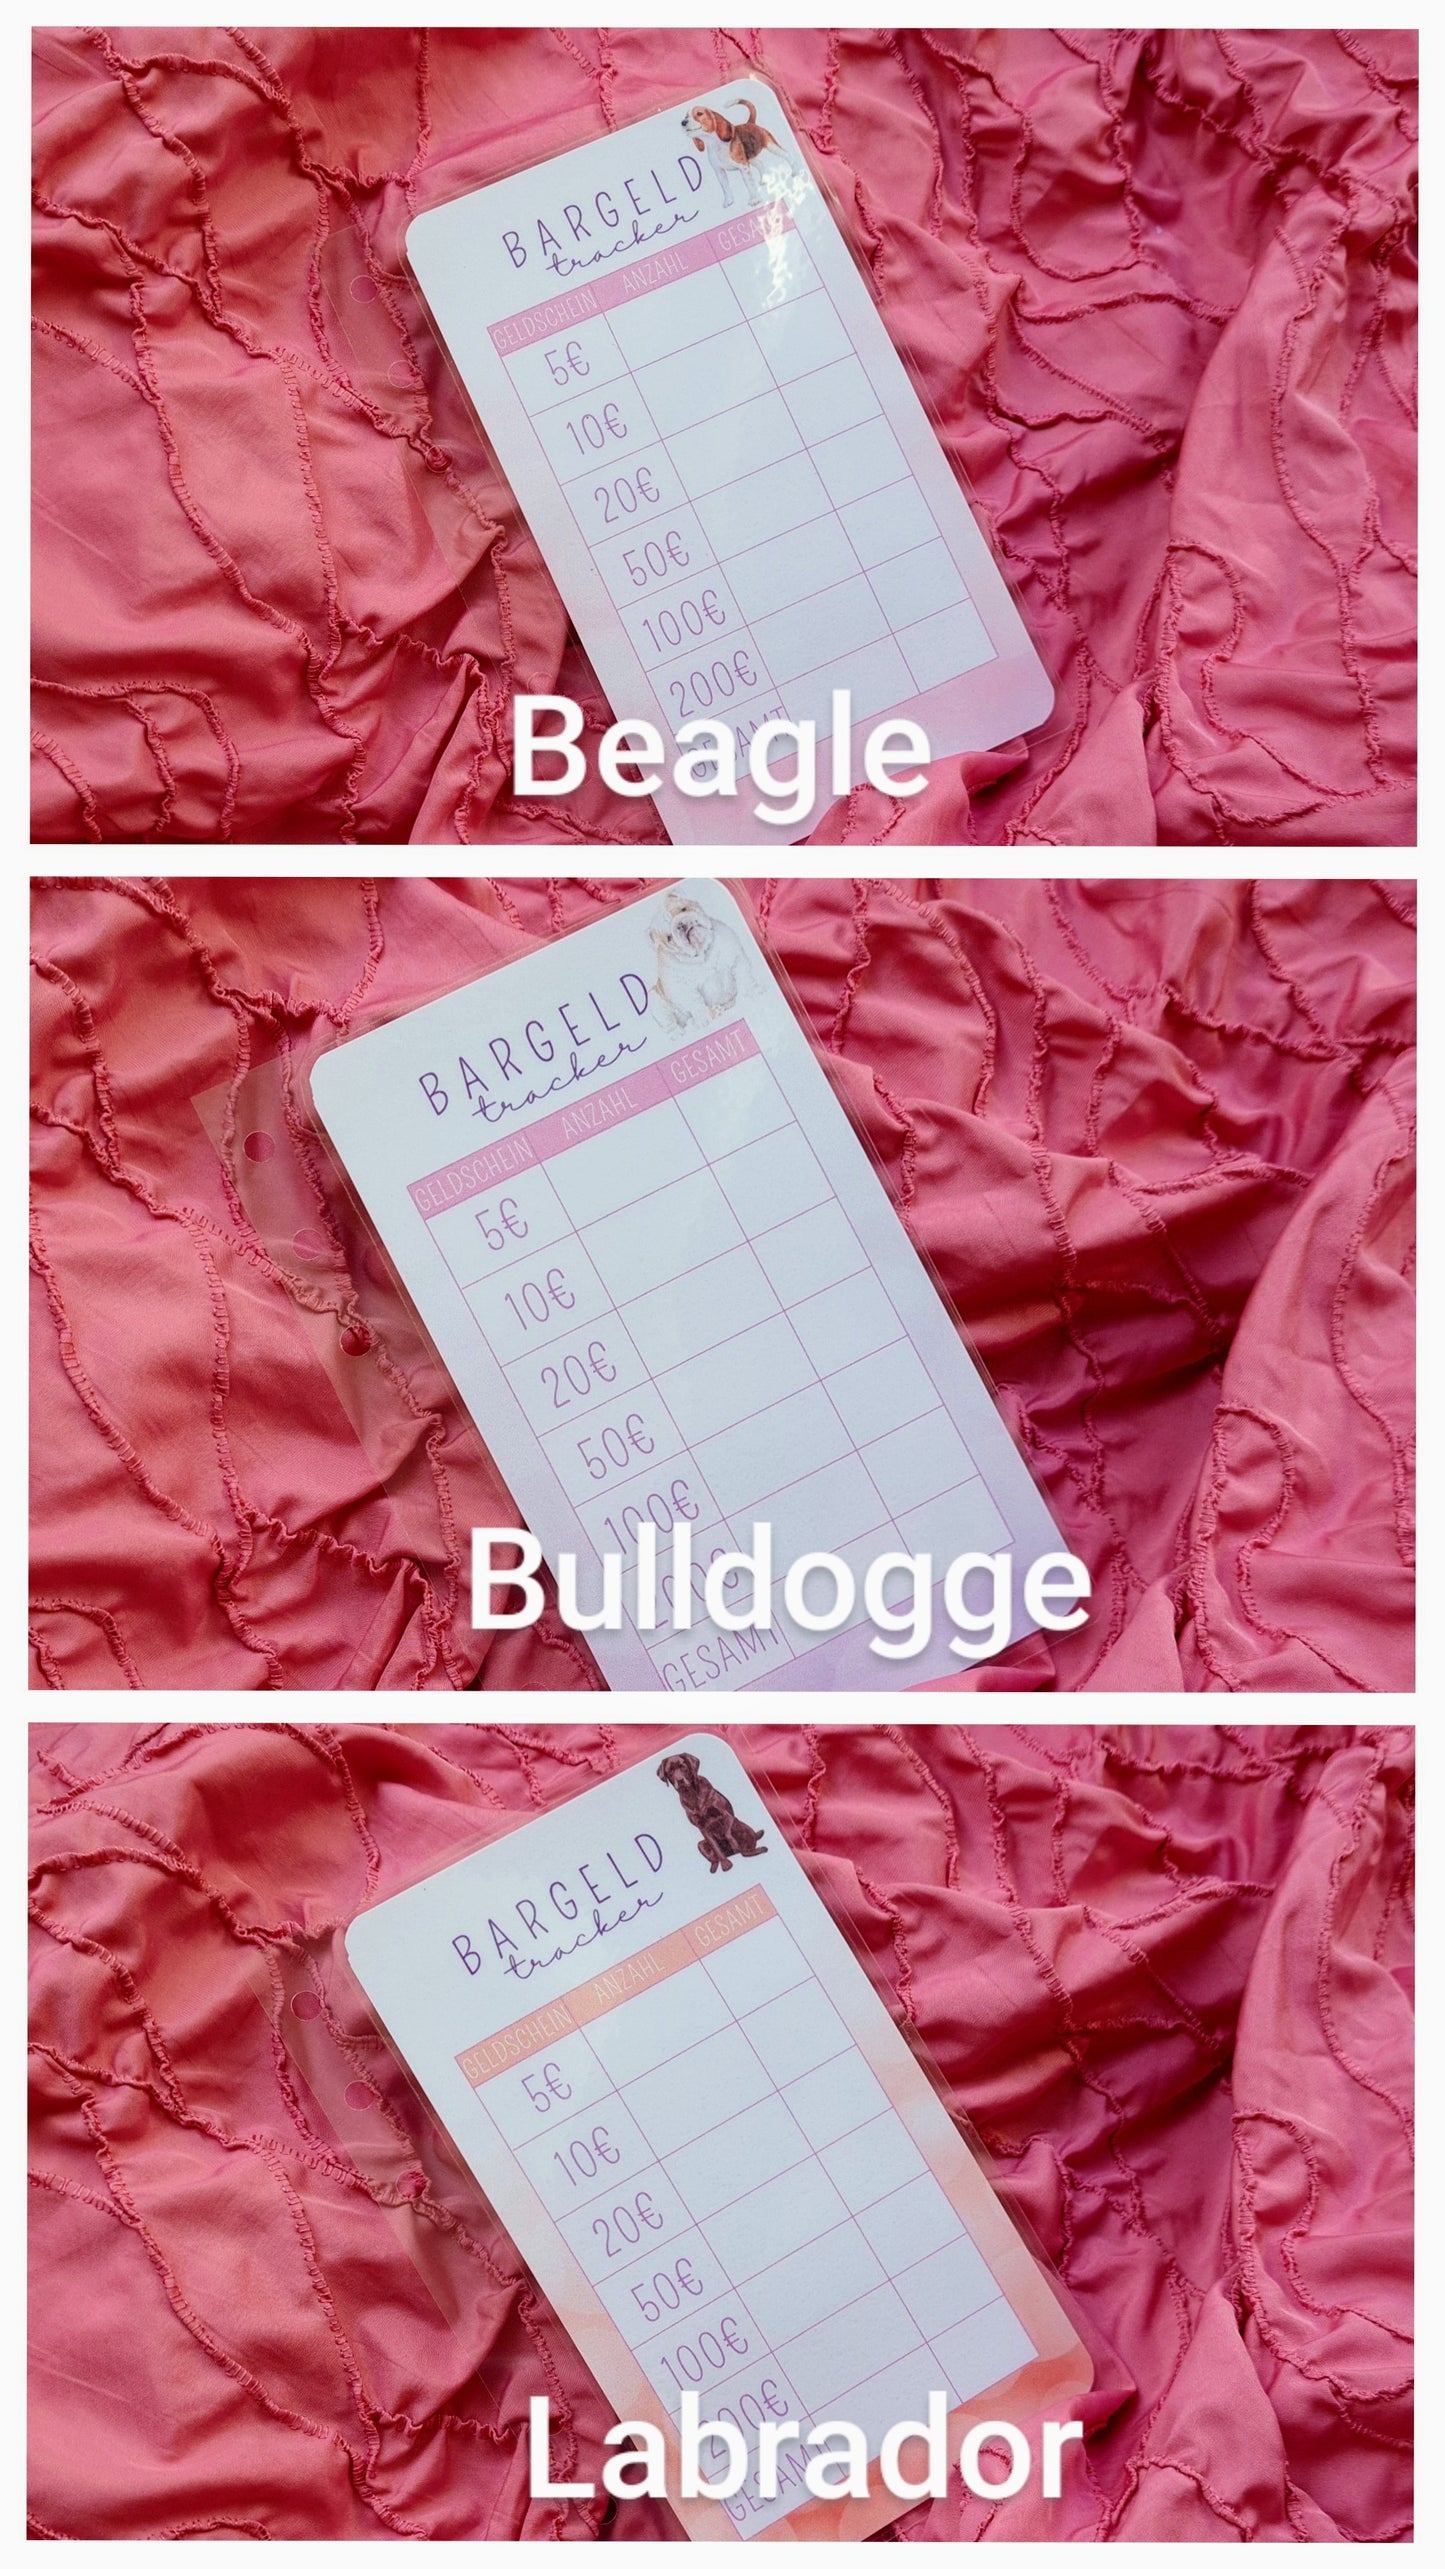 Bargeld - Tracker im Hunde Design